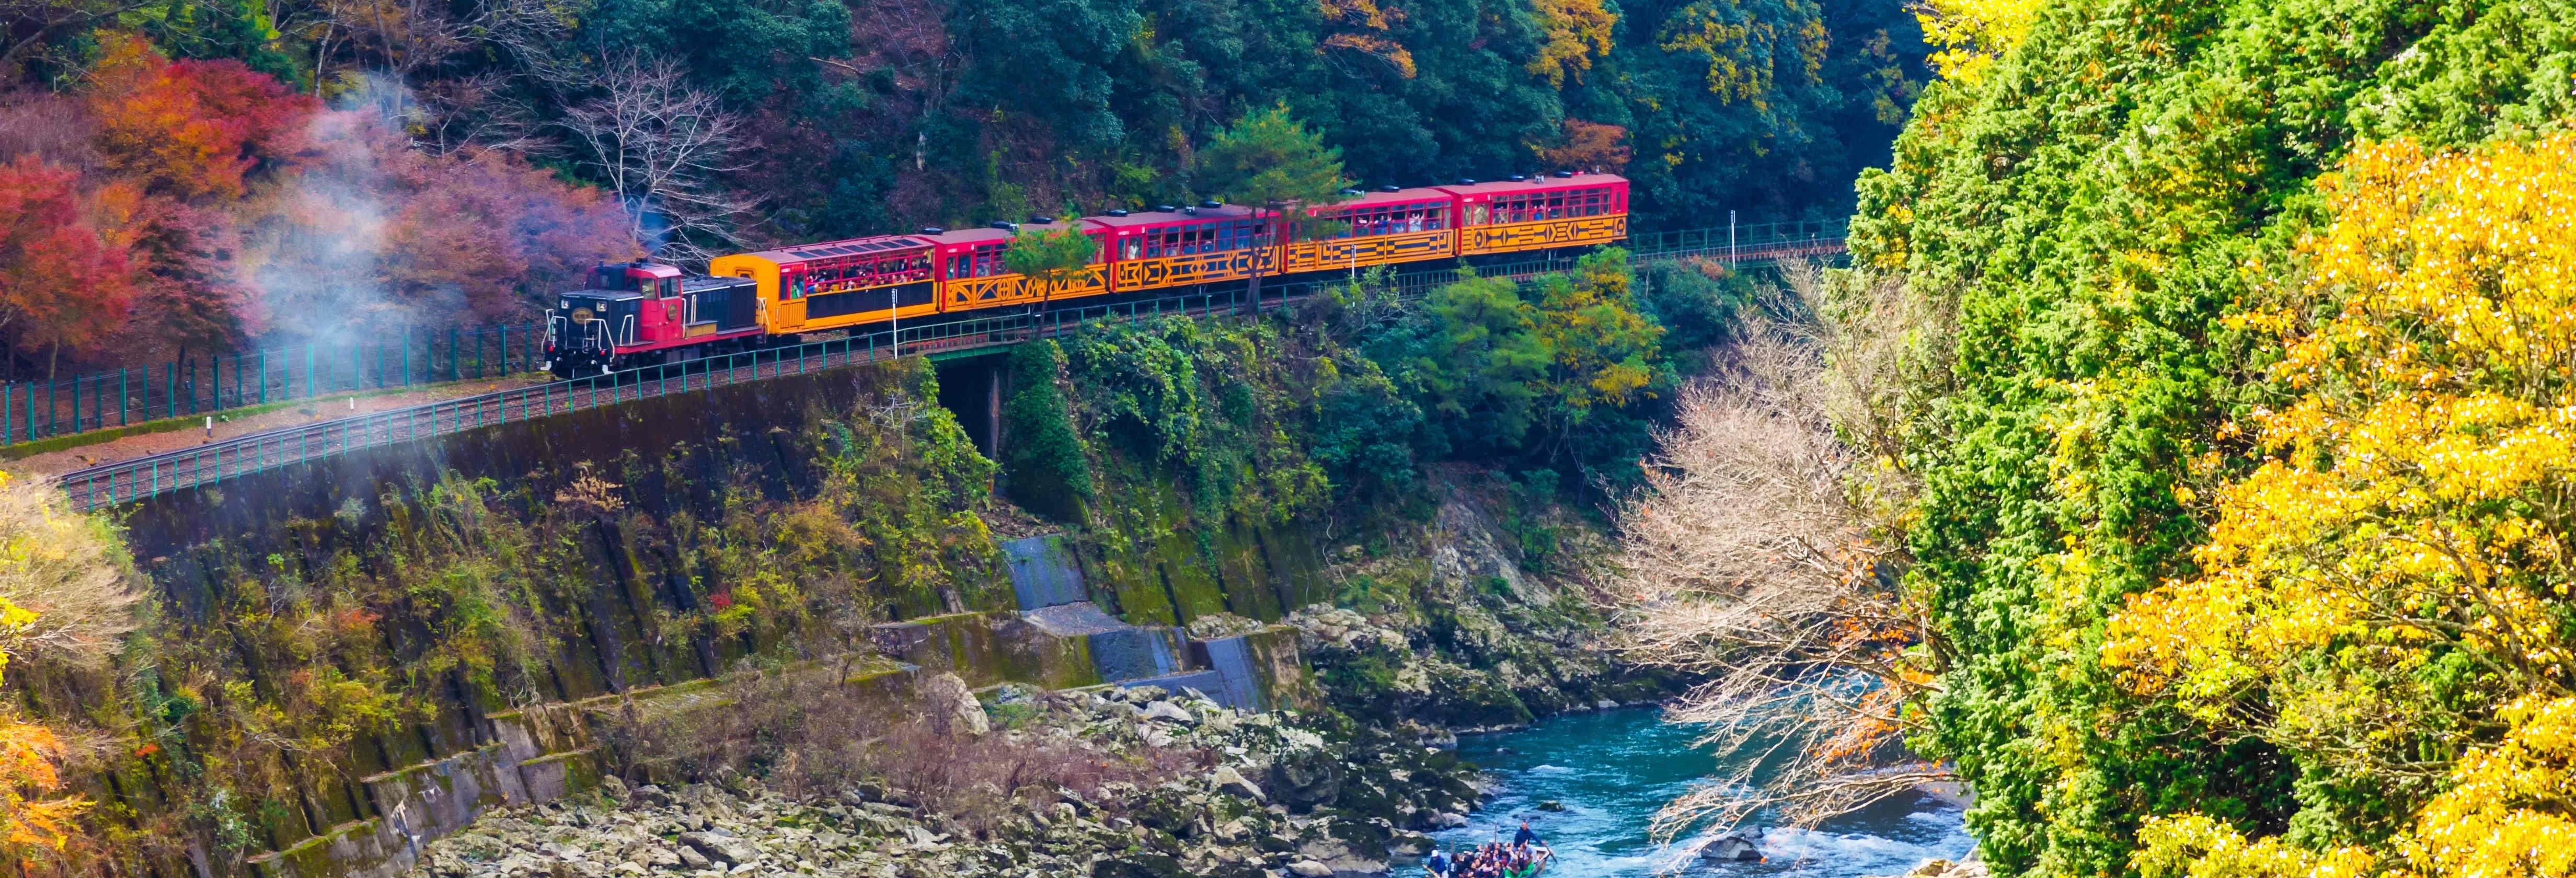 Excursão a Kyoto + Trem Sagano